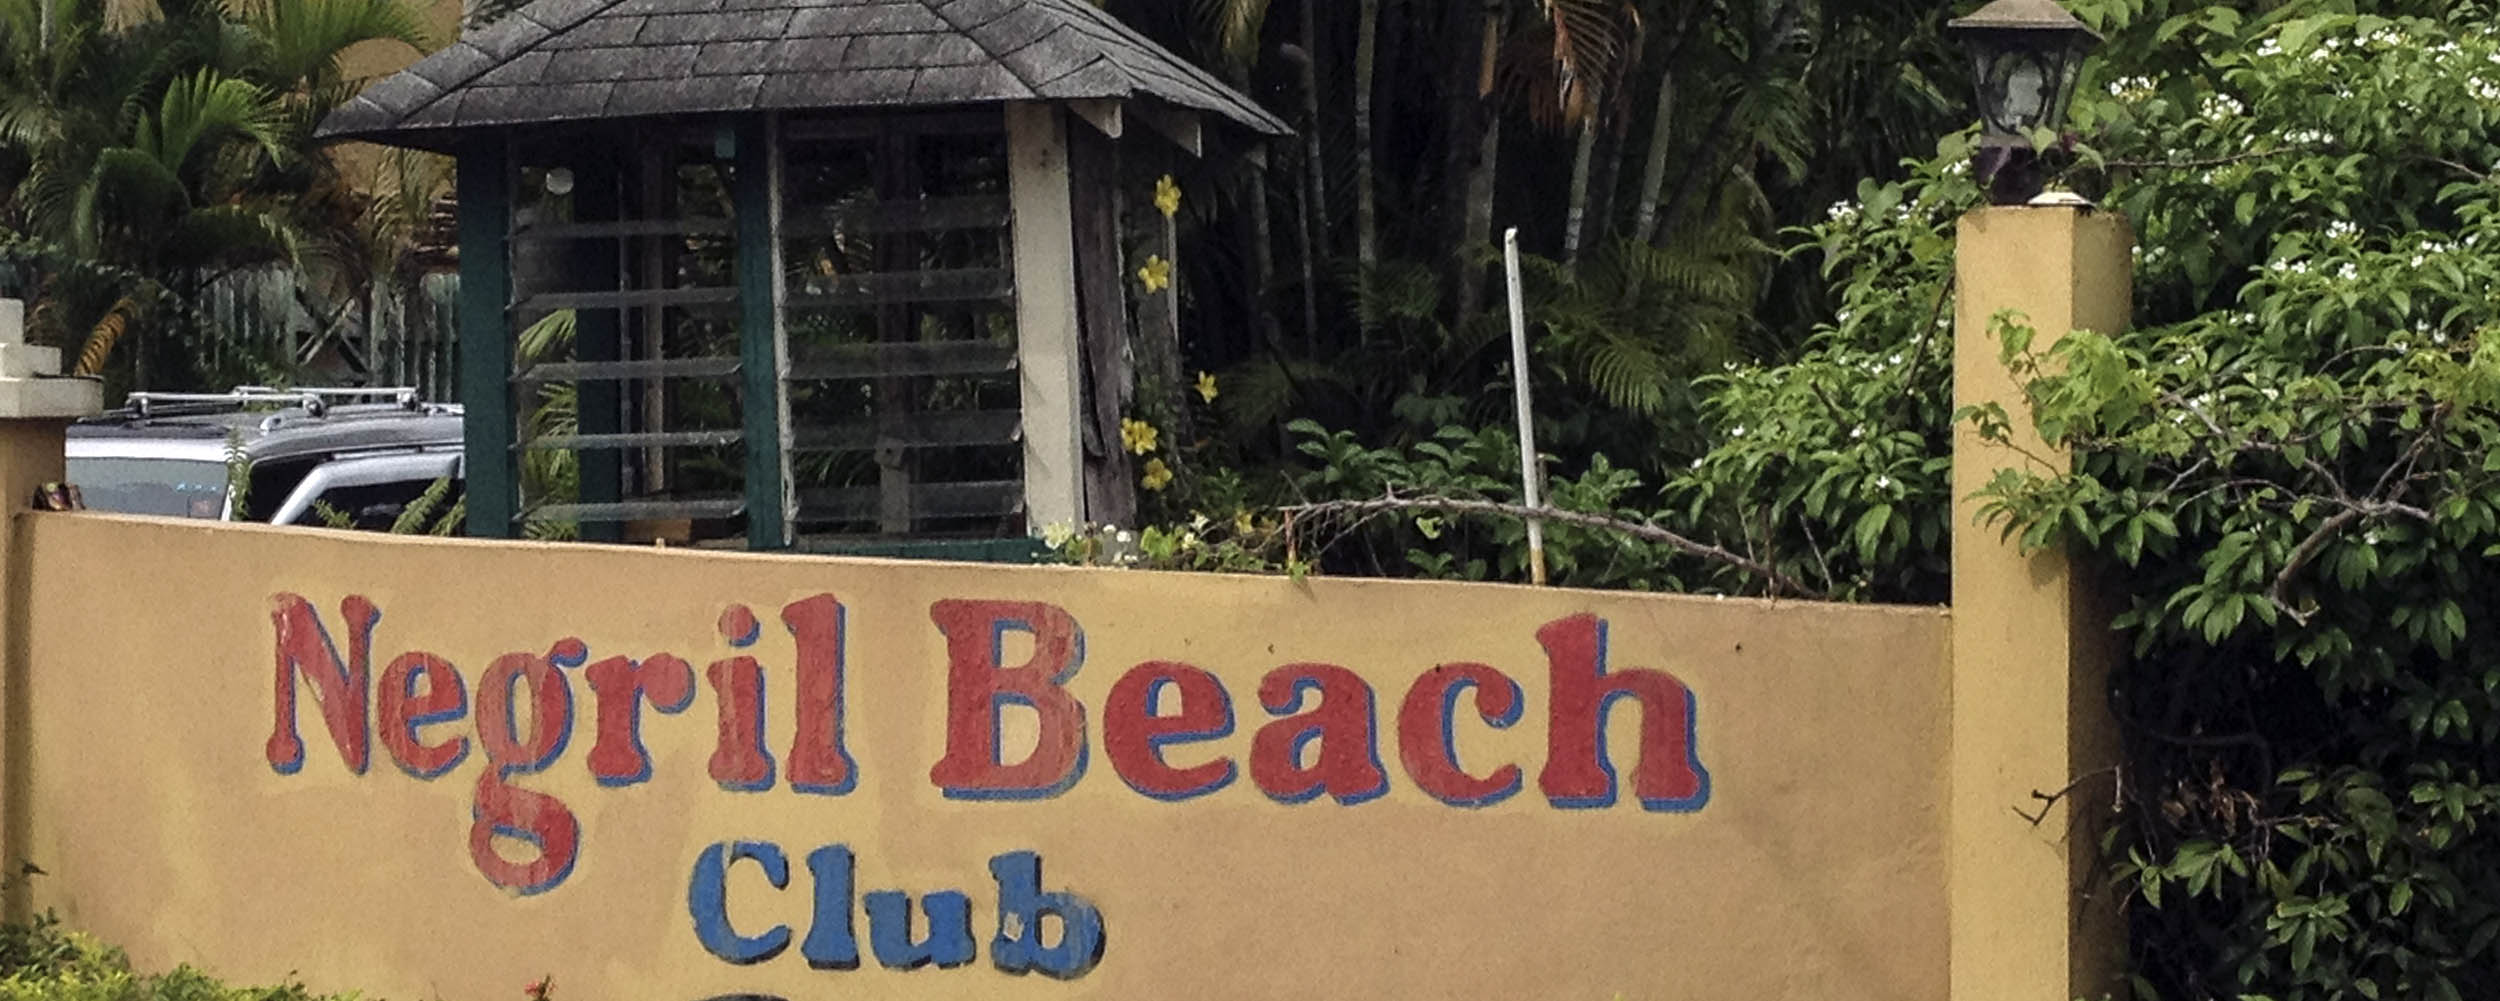 Negril Beach Club - Negril Jamaica